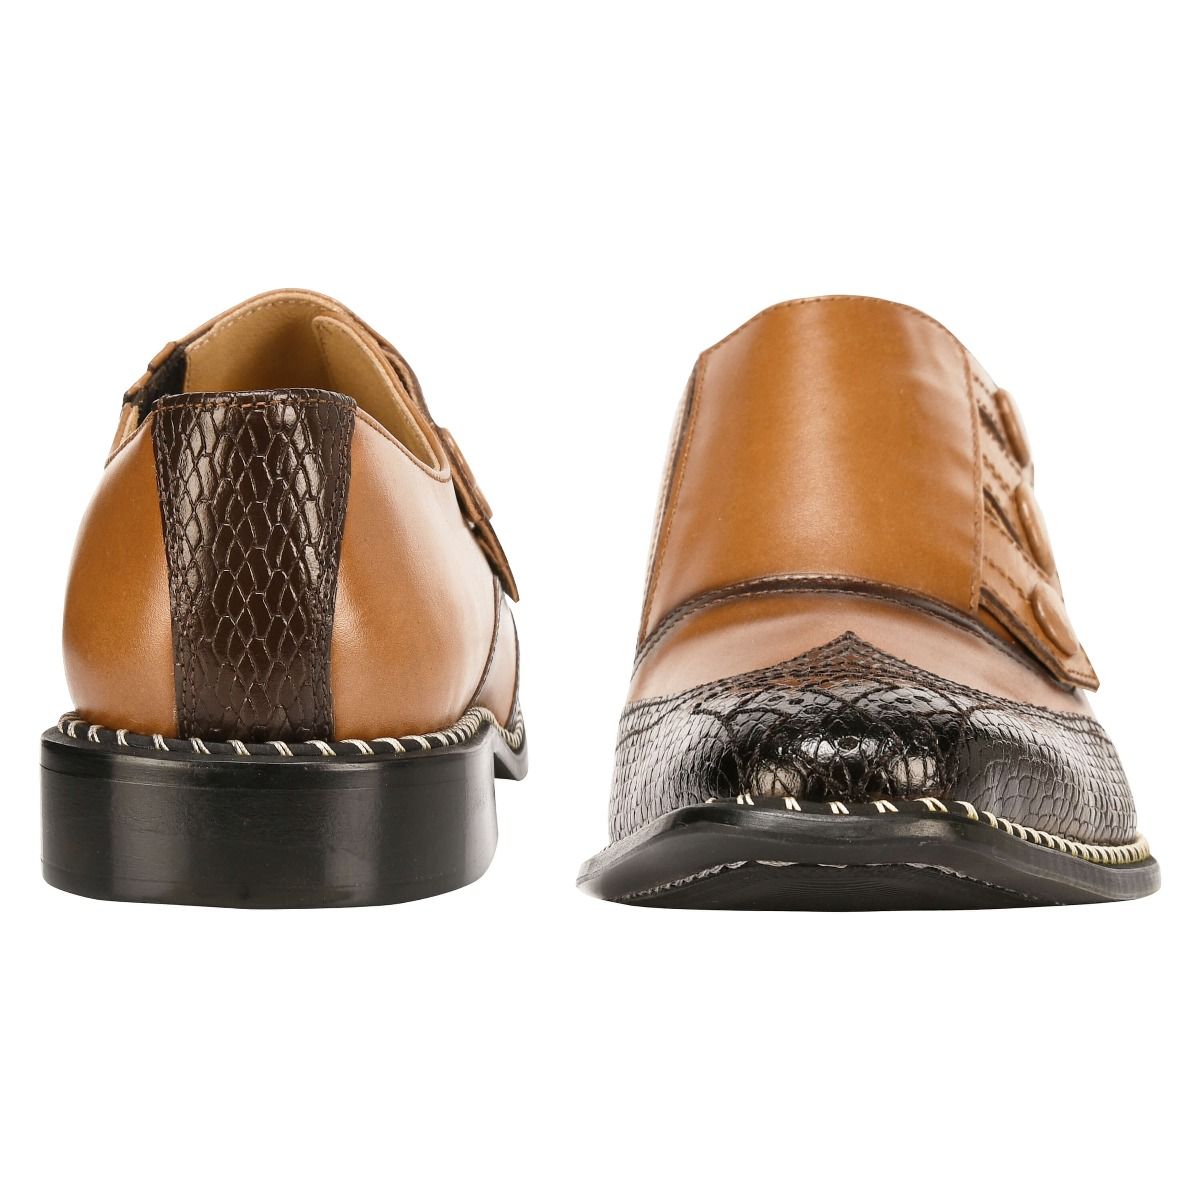 LIBERTYZENO Triple Monk Strap Slip-on Mens Leather Formal Wingtip Brogue Dress Shoes - image 4 of 5